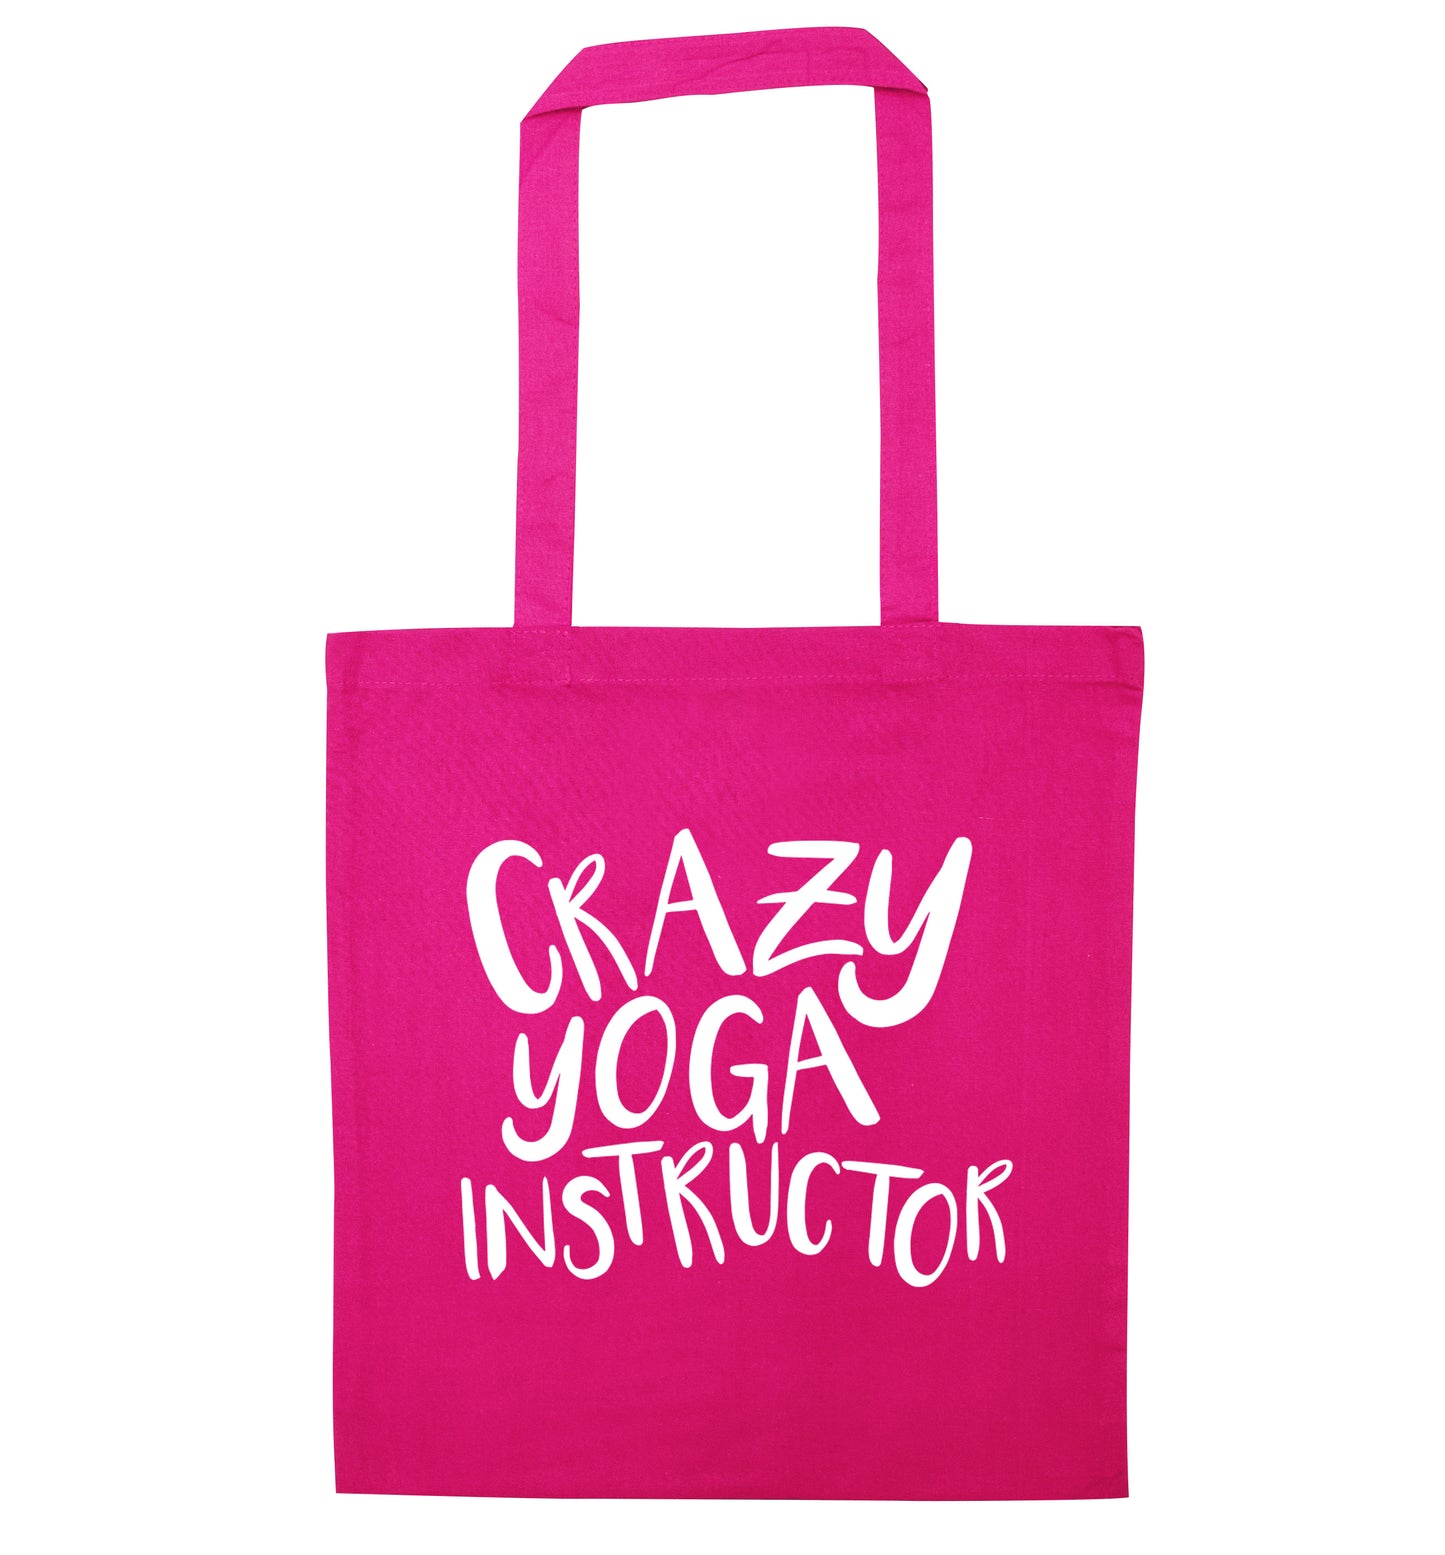 Crazy yoga instructor pink tote bag